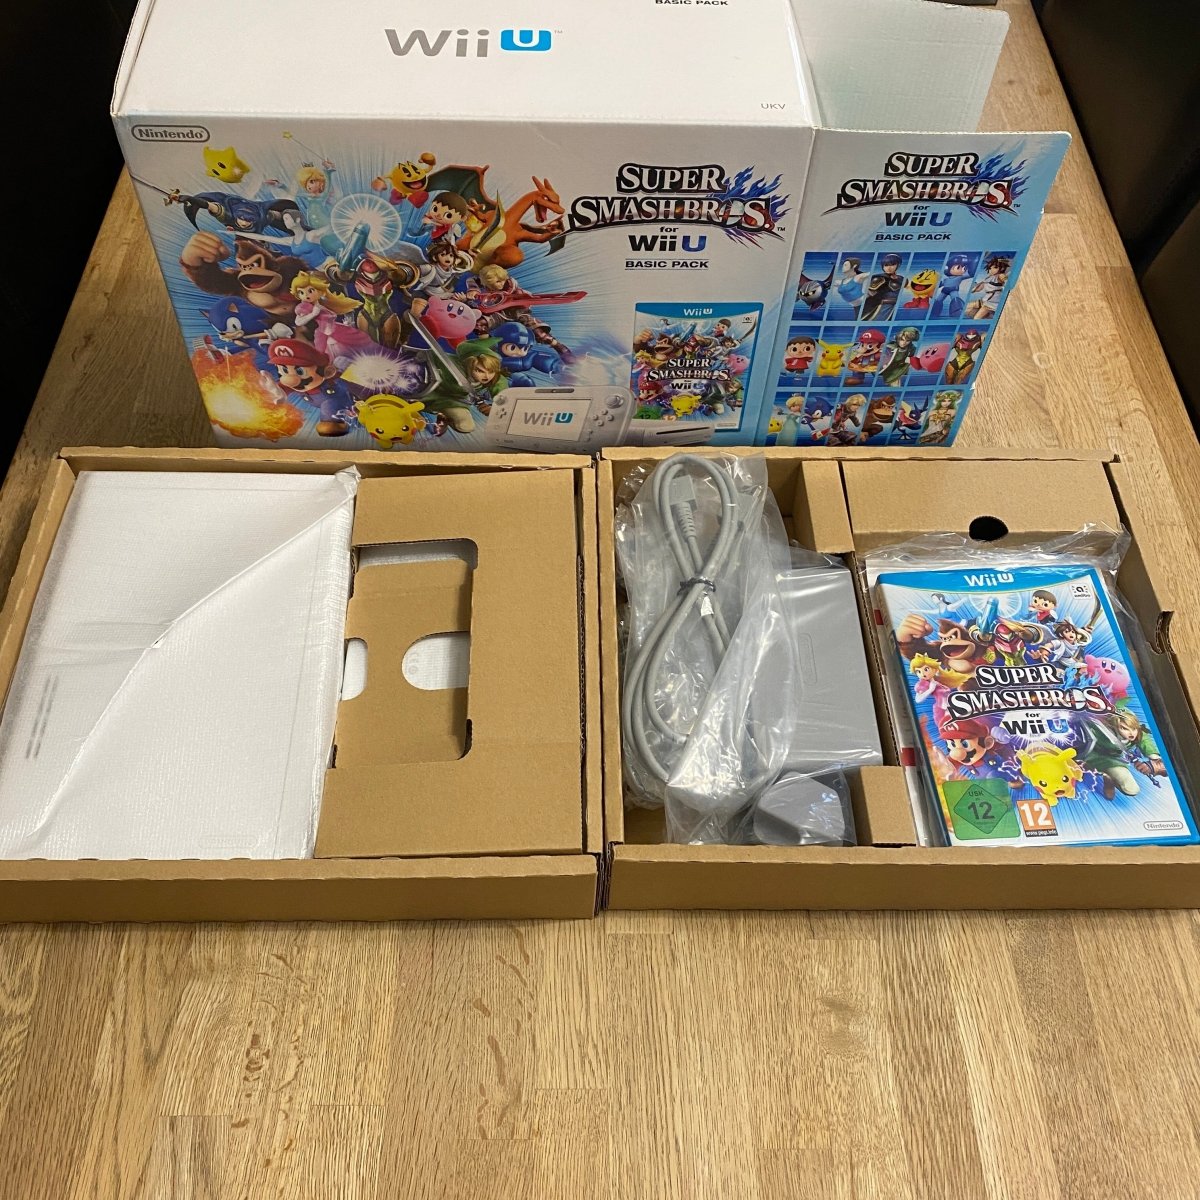 Super Smash Bros. PRE-OWNED Nintendo Wii U PREOWNED - Best Buy